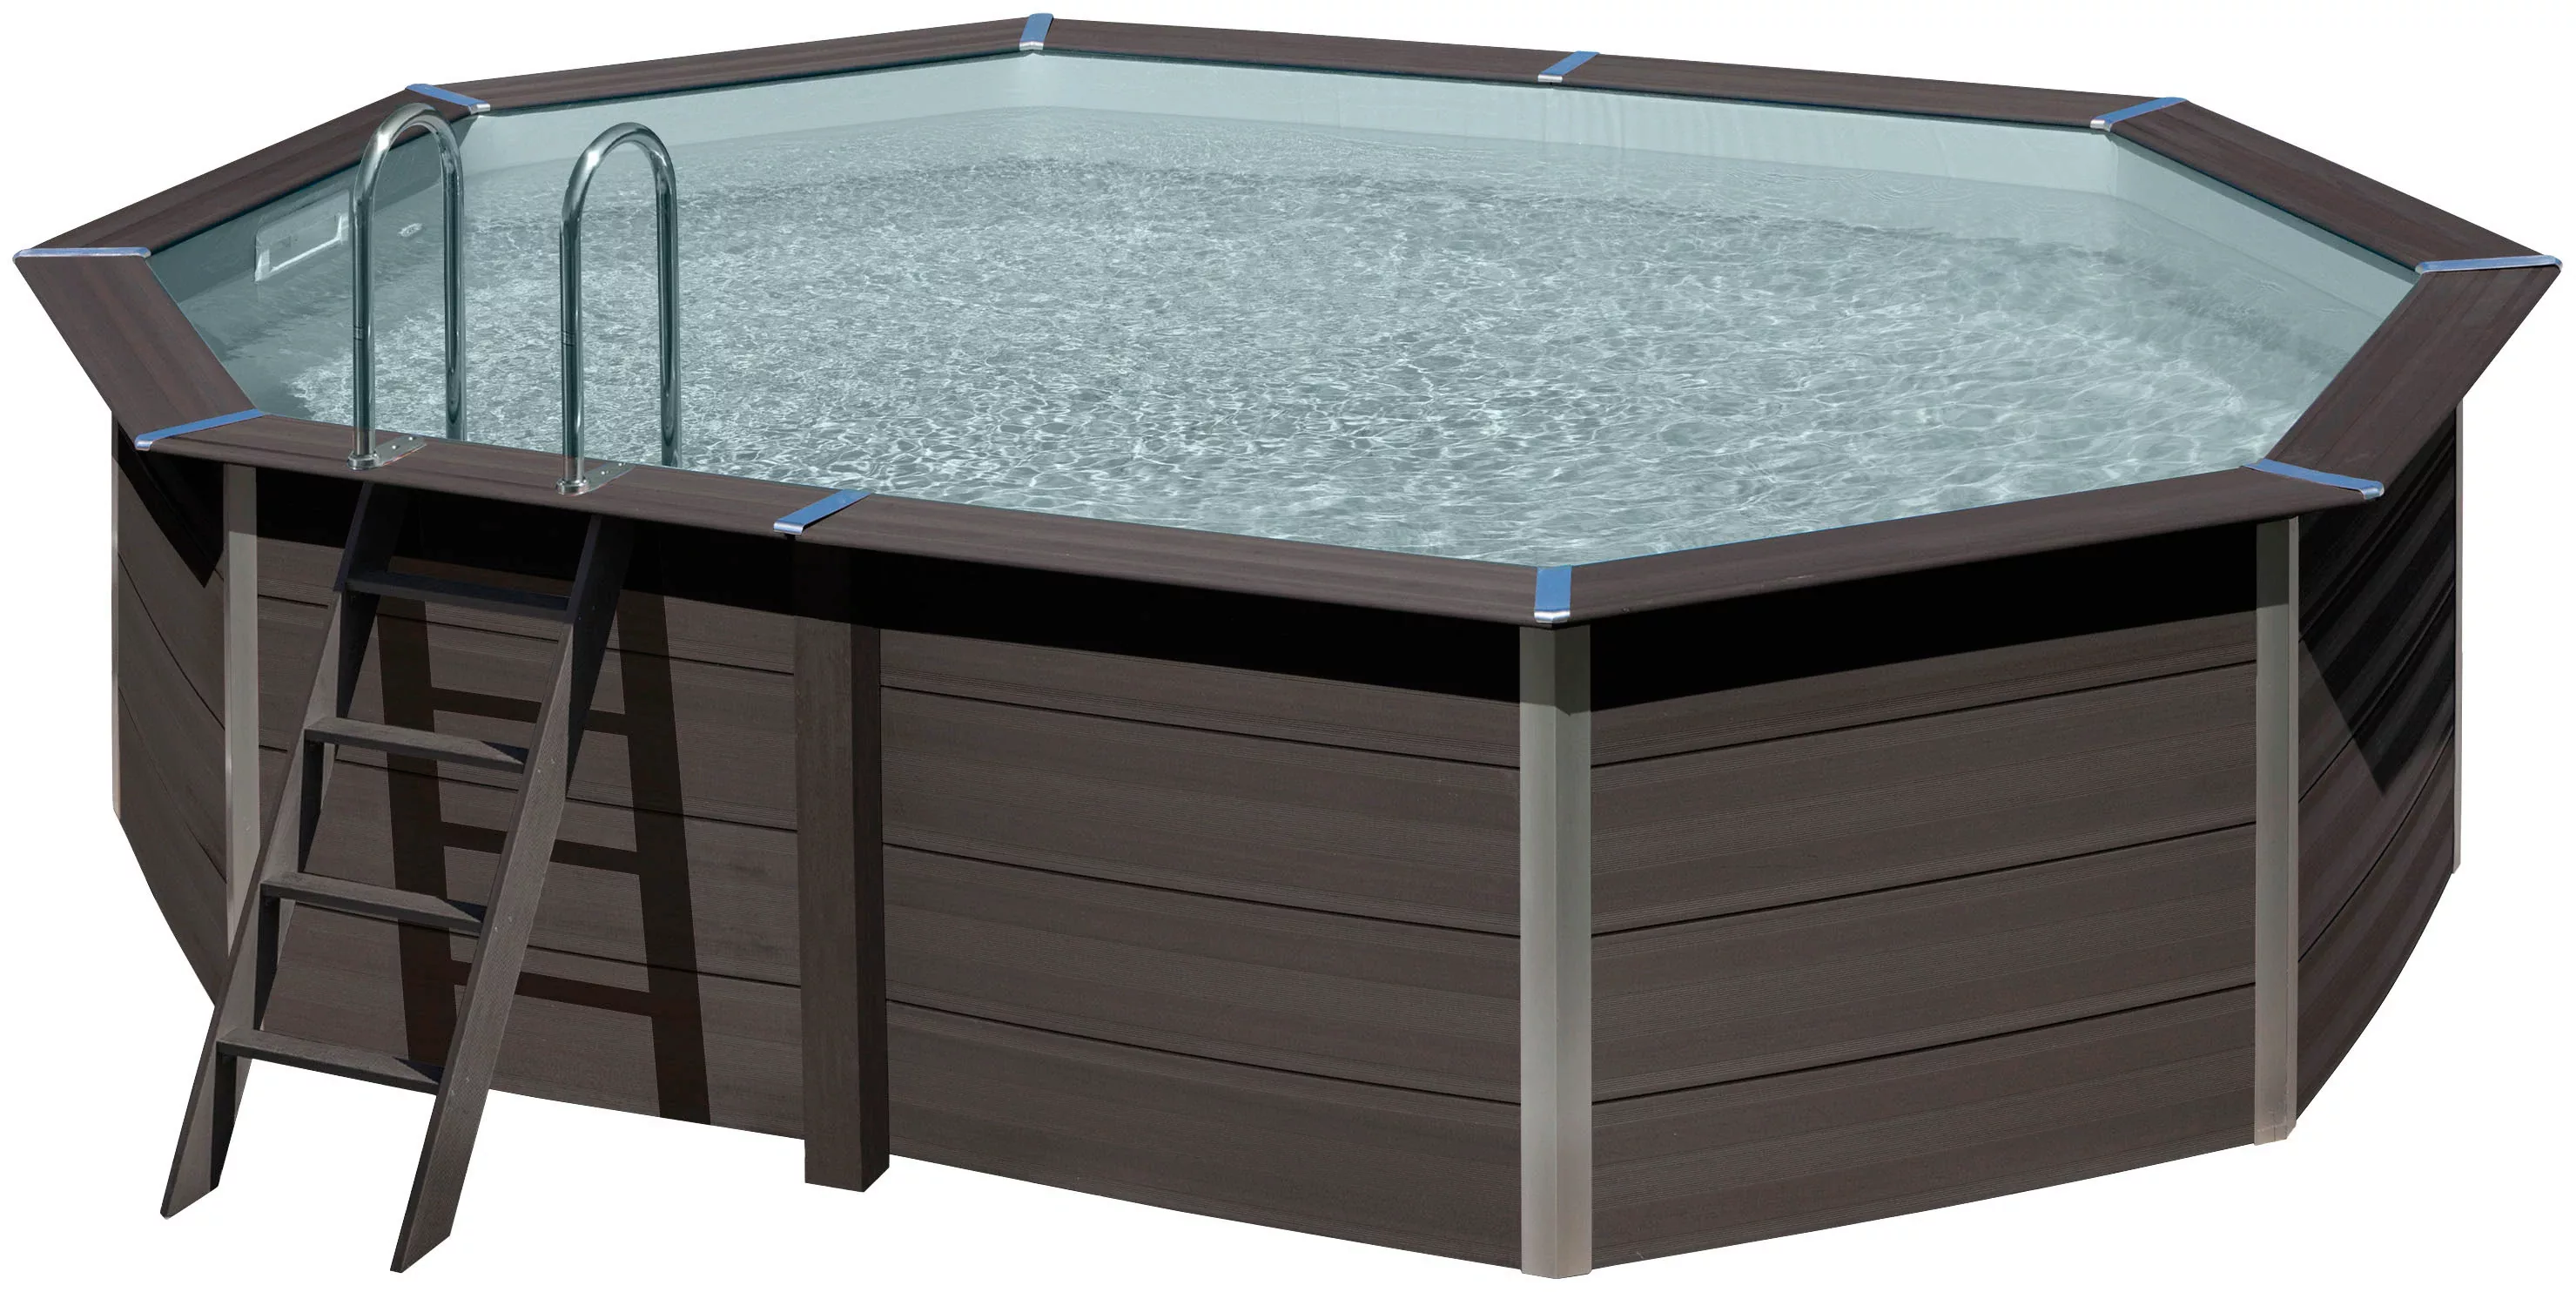 Gre Composite Pool Avantgarde Oval 524 cm x 386 cm x 124 cm günstig online kaufen